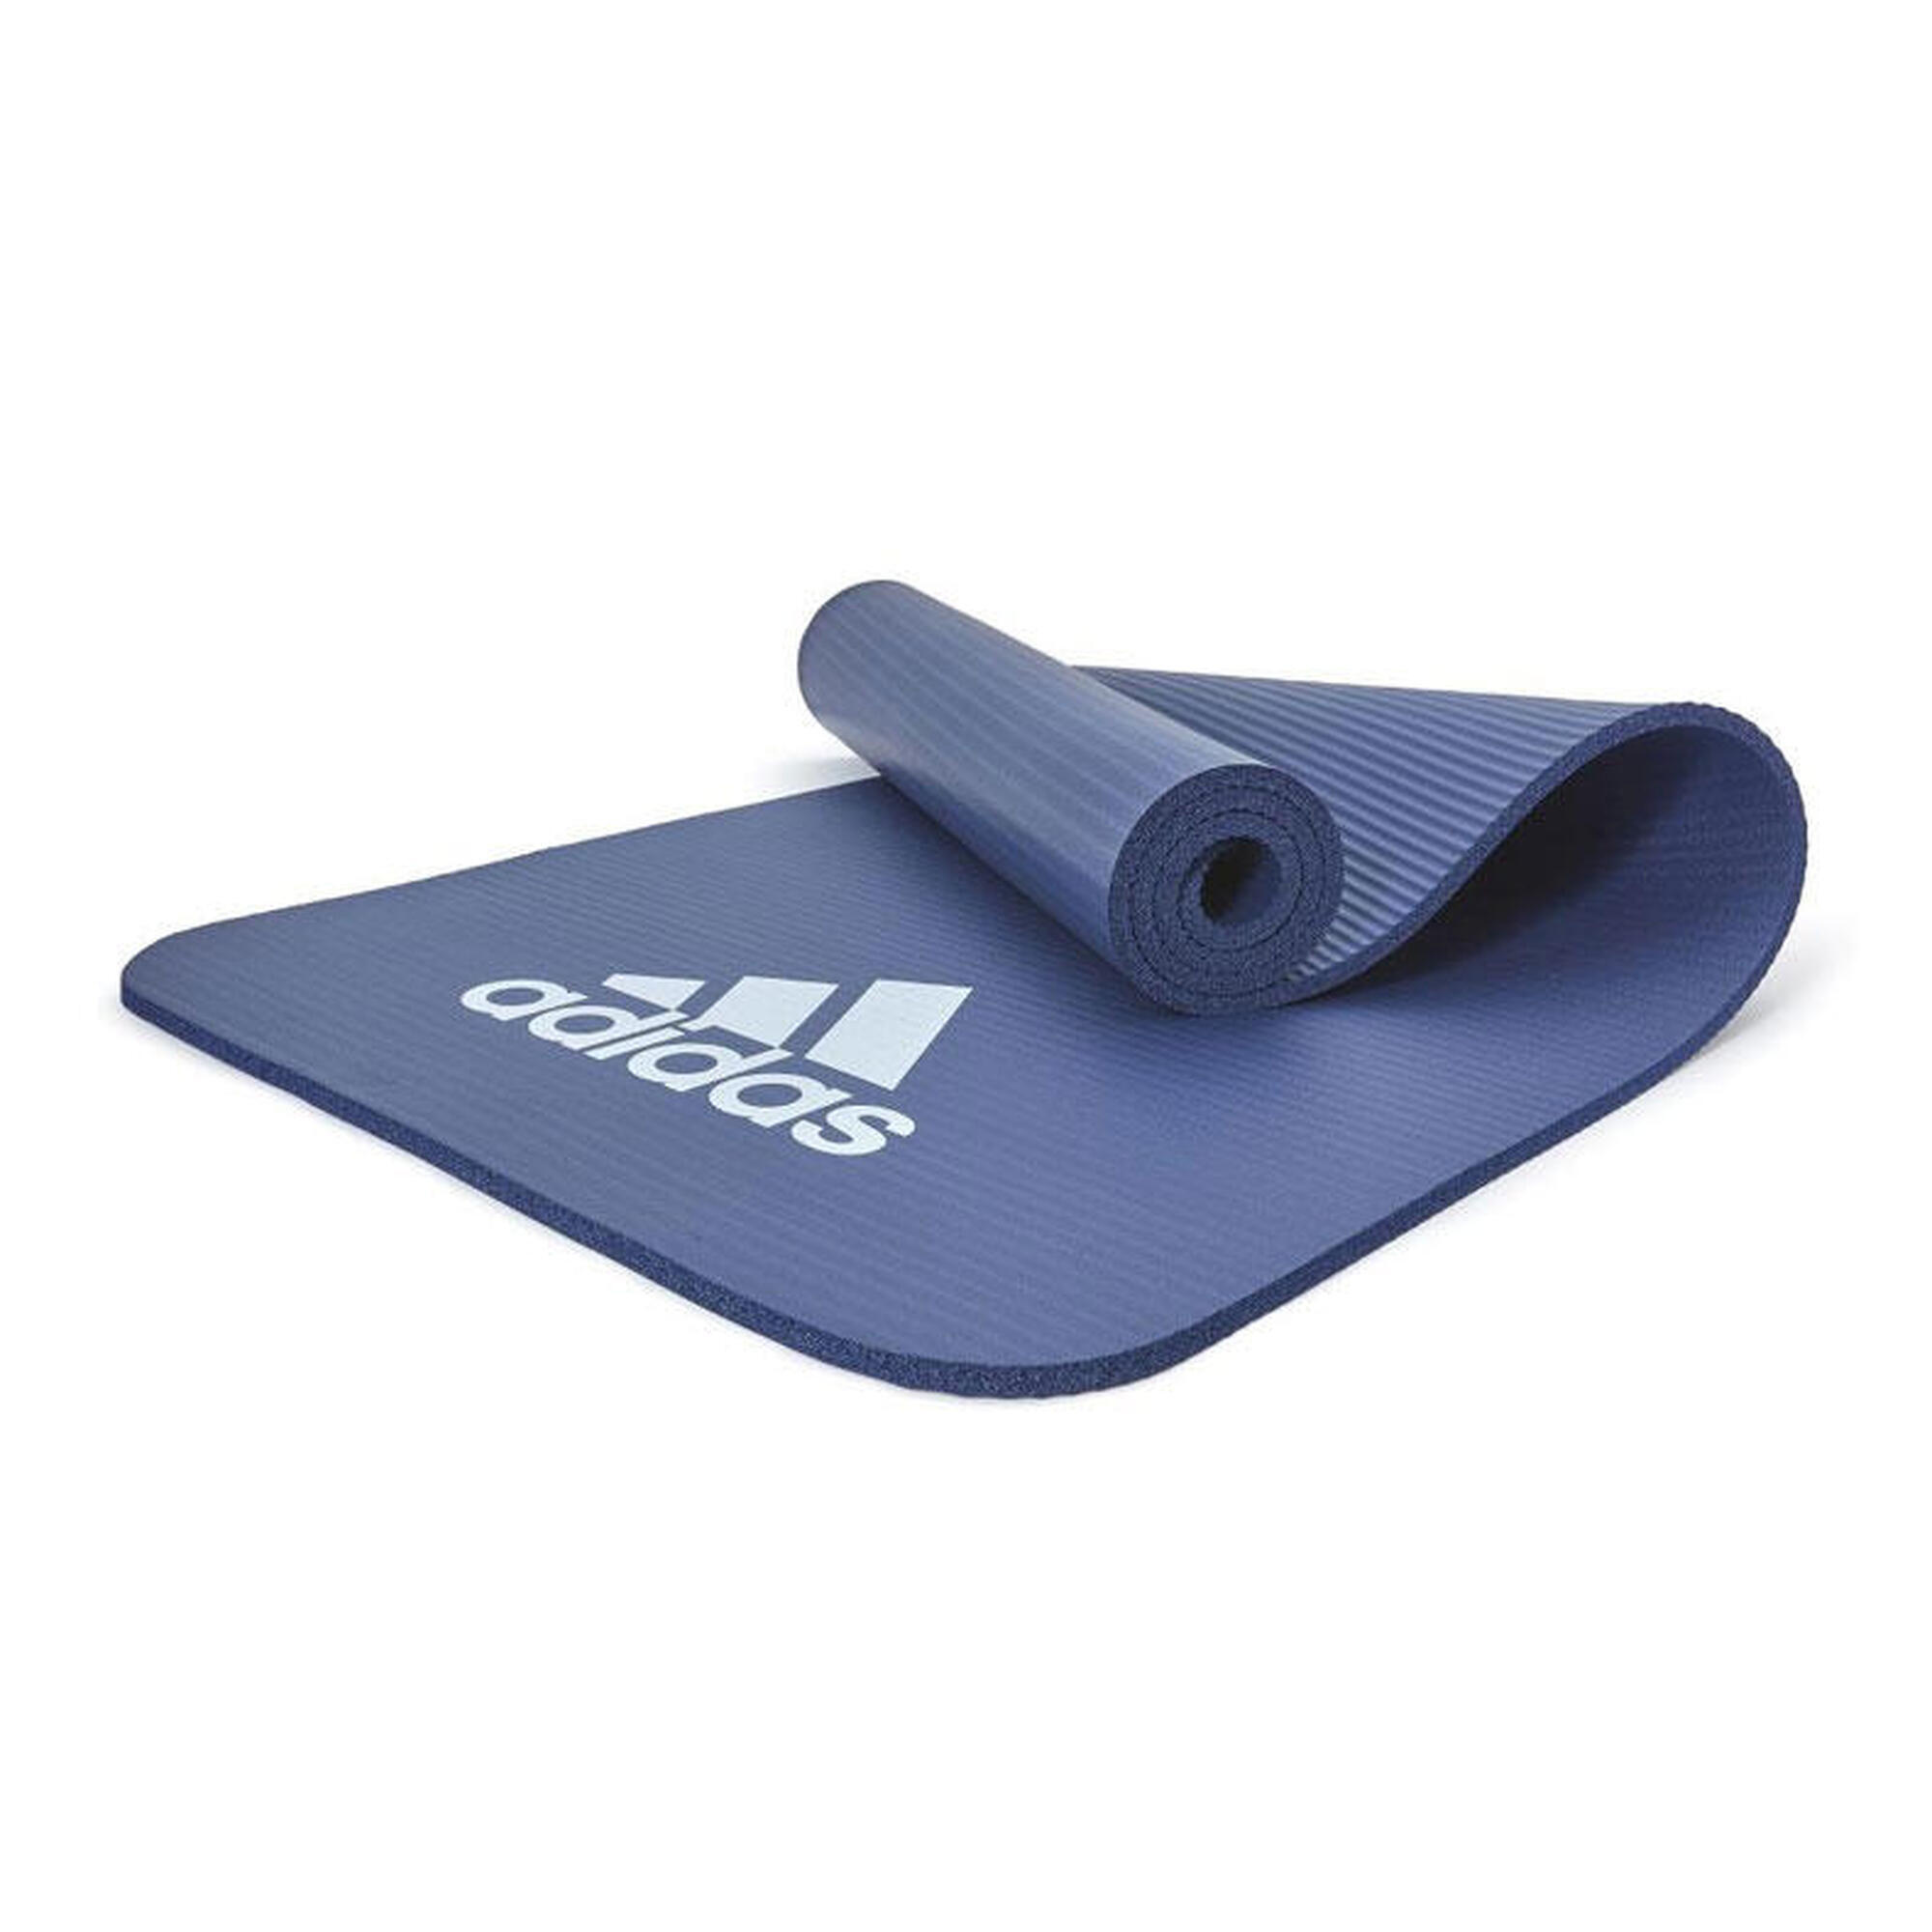 Esterilla de fitness Adidas - 10mm - Azul